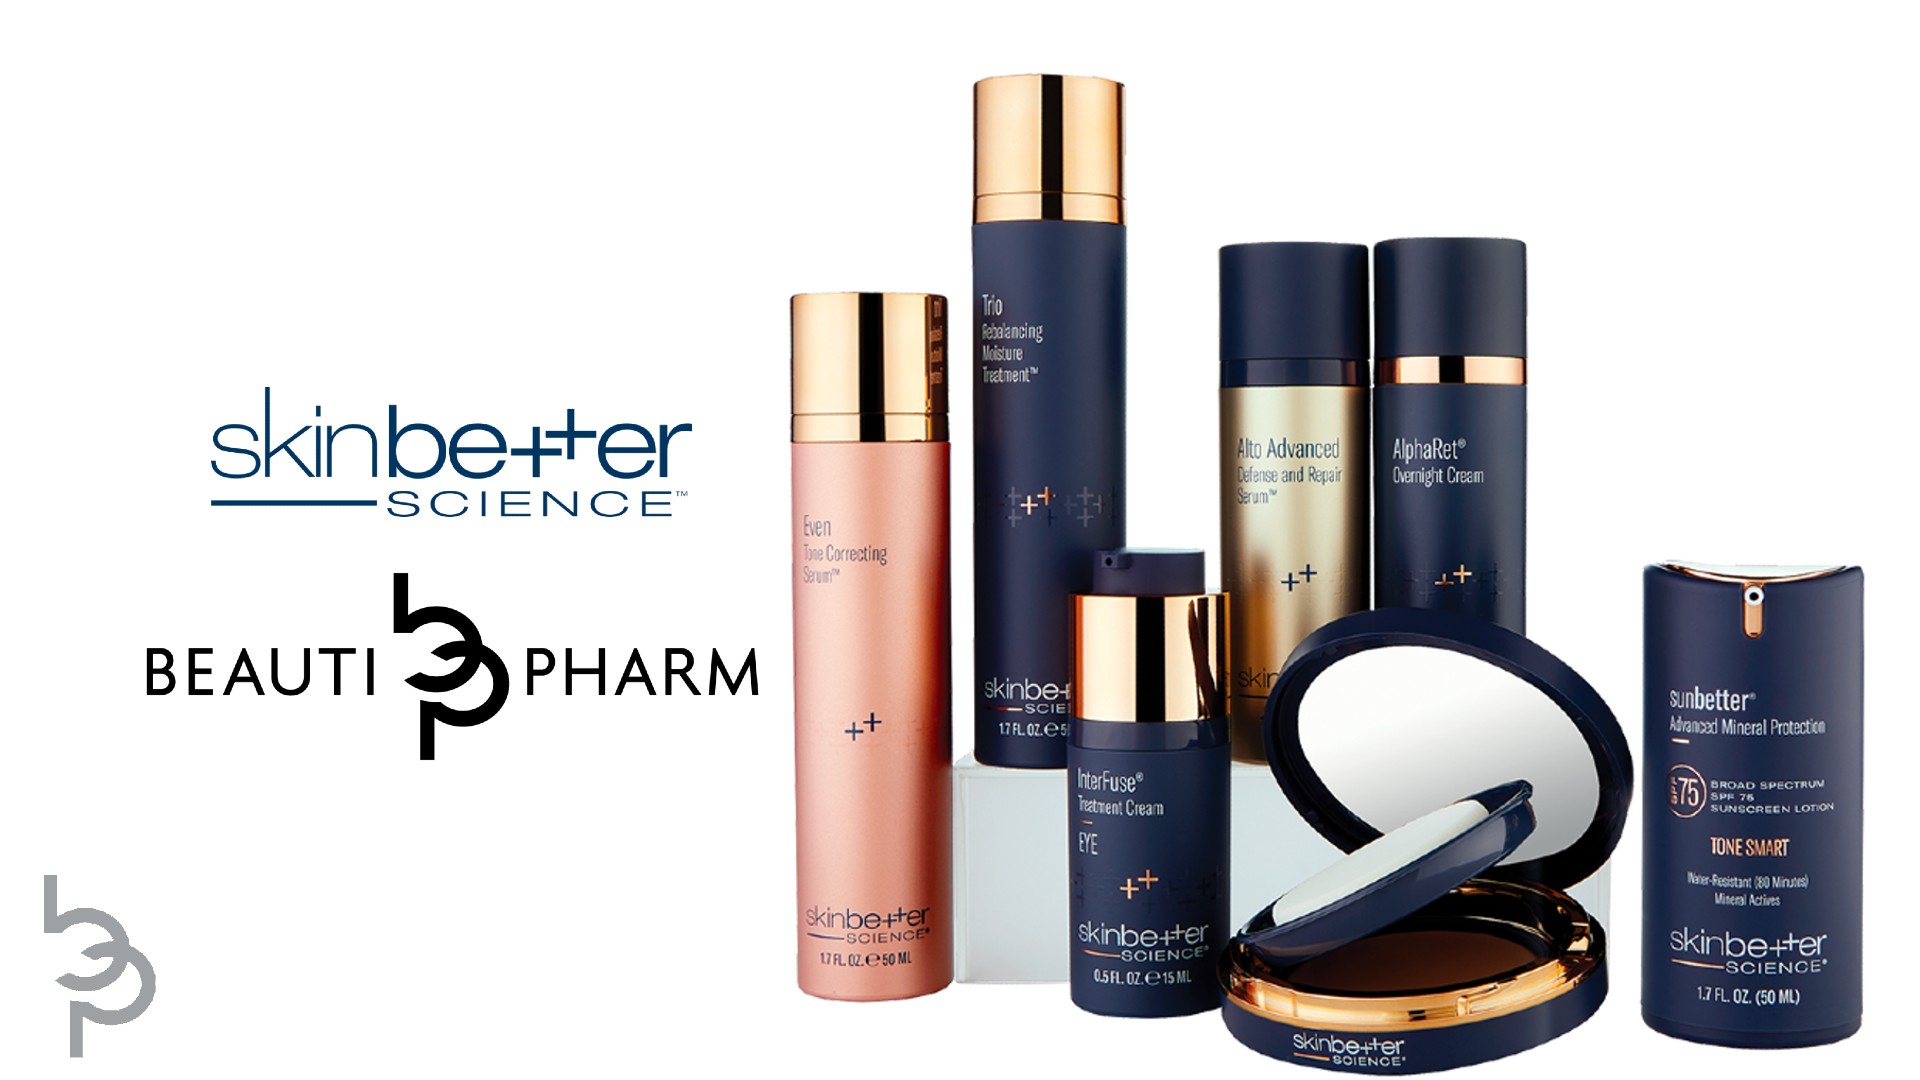 skinbetter science  Award-Winning Professional Skincare